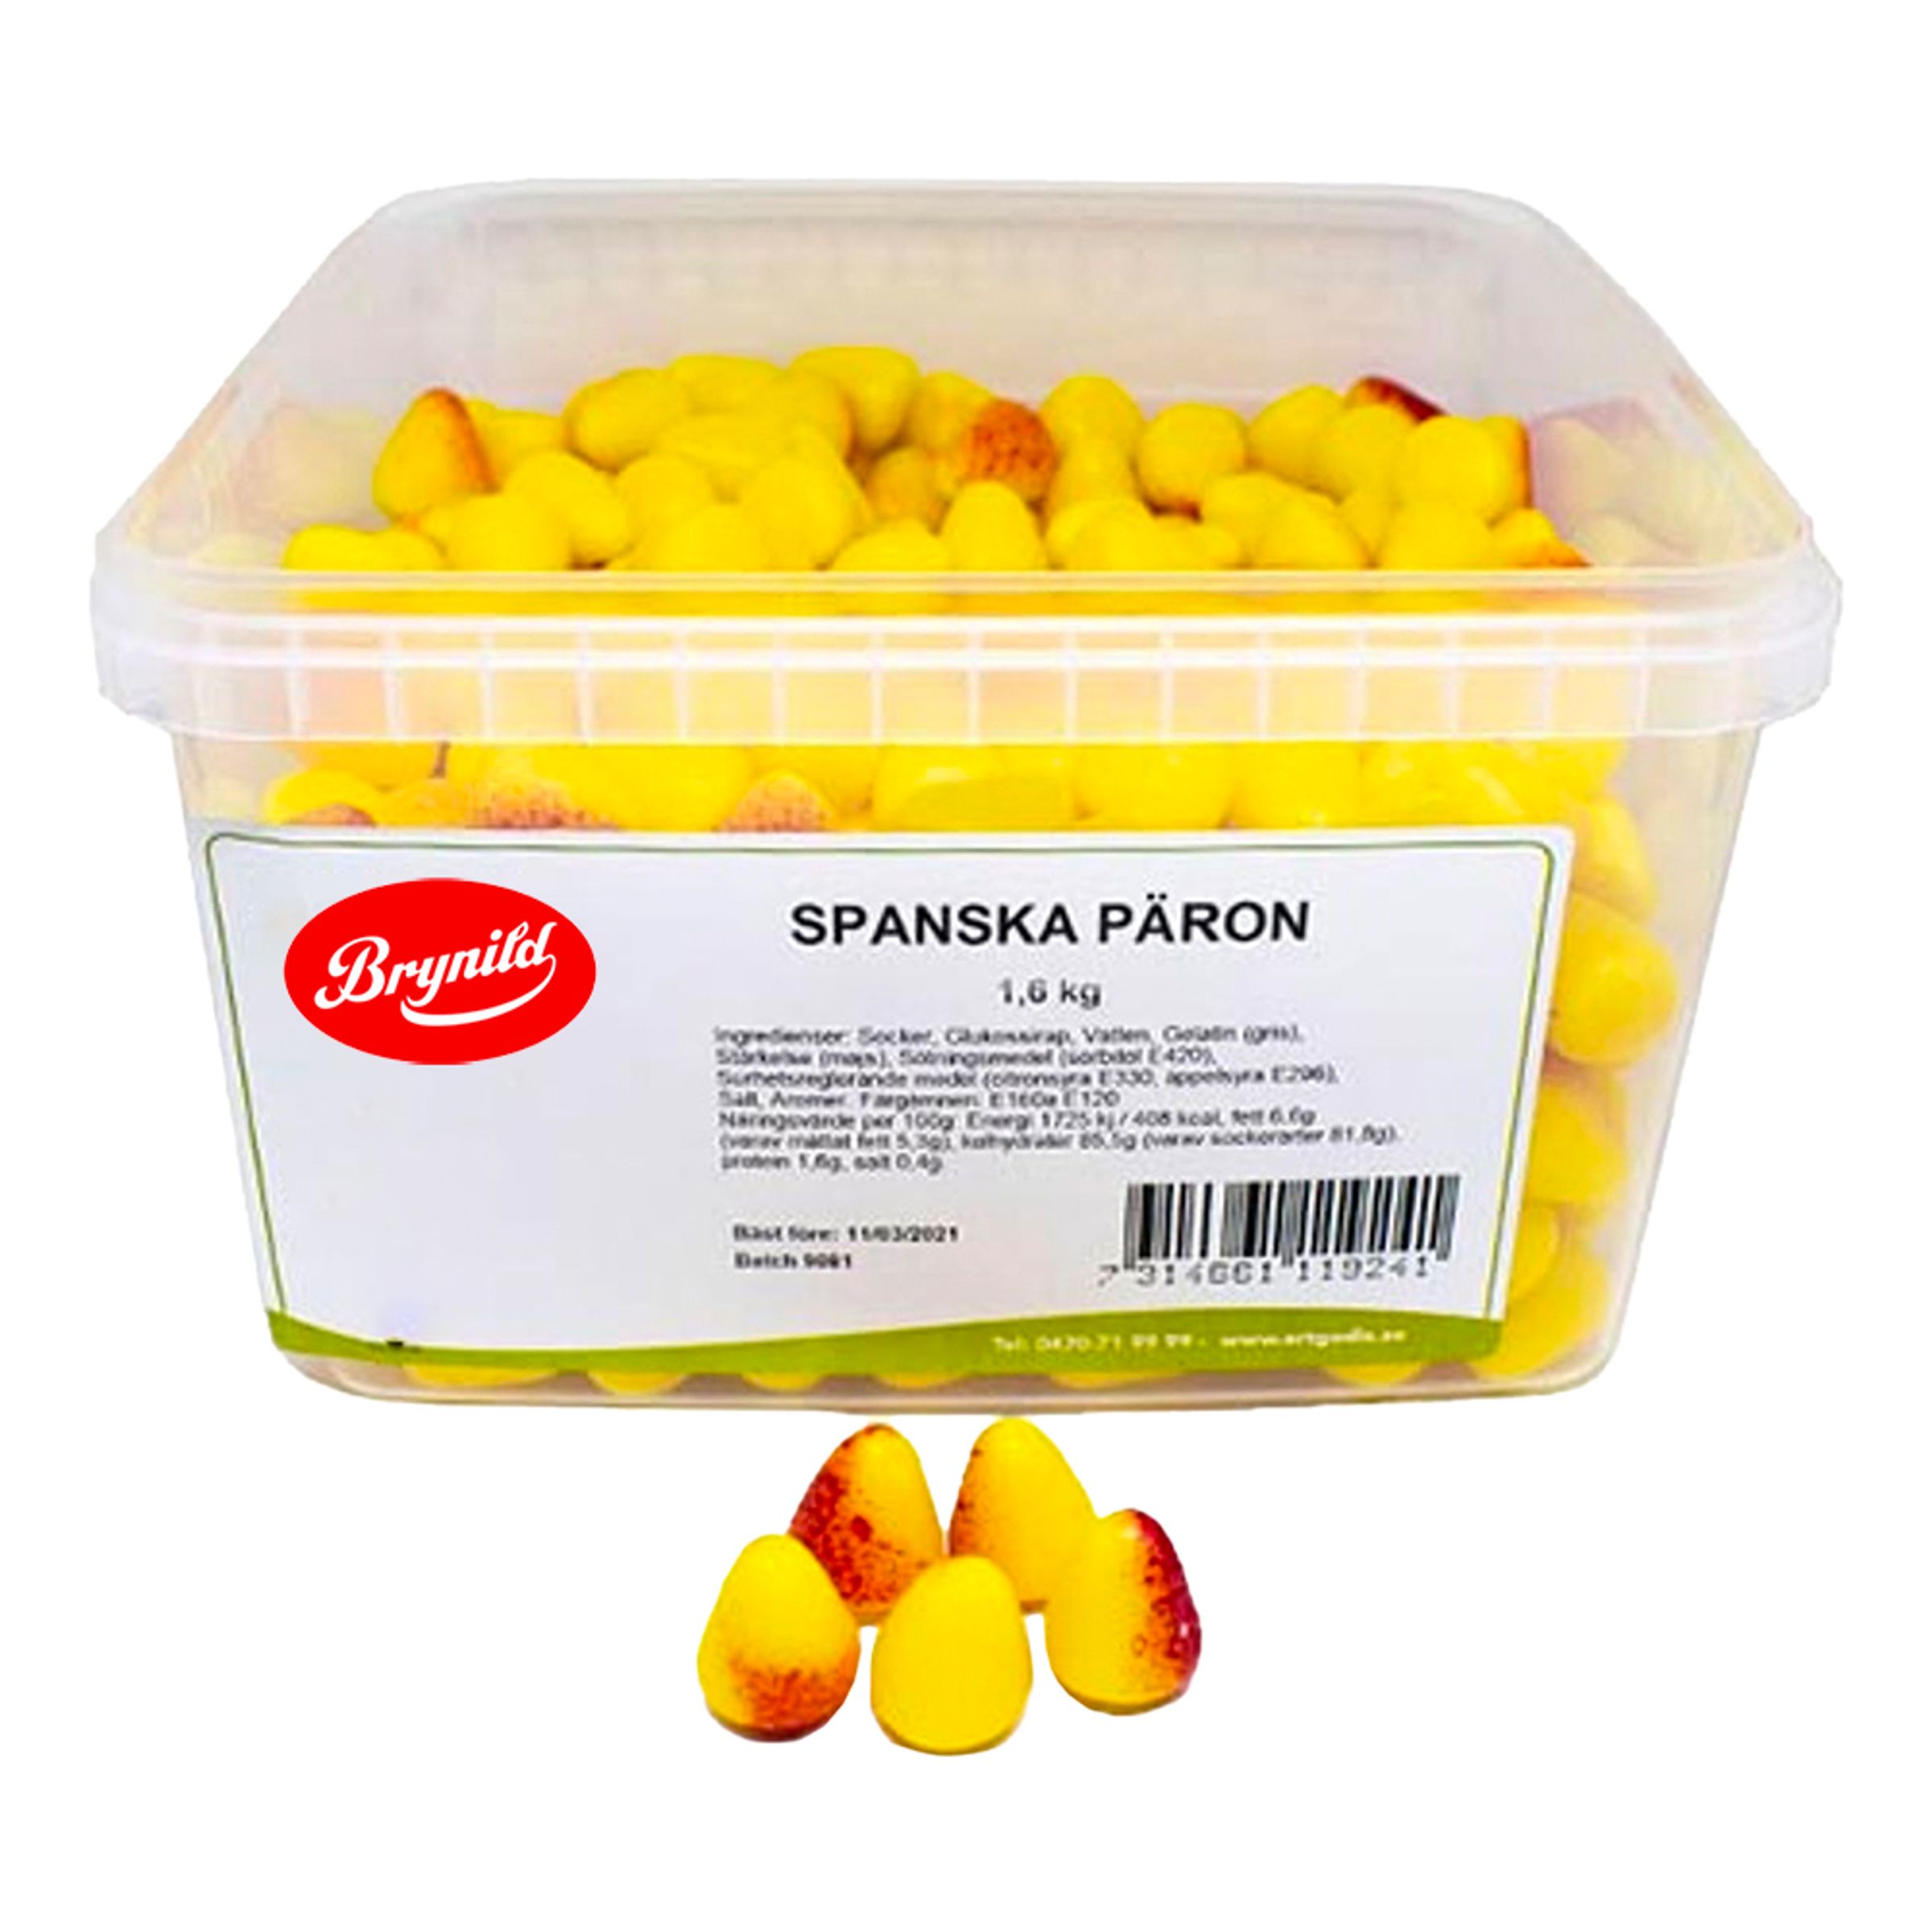 Brynild Spanska Päron Storpack - 1,6 kg